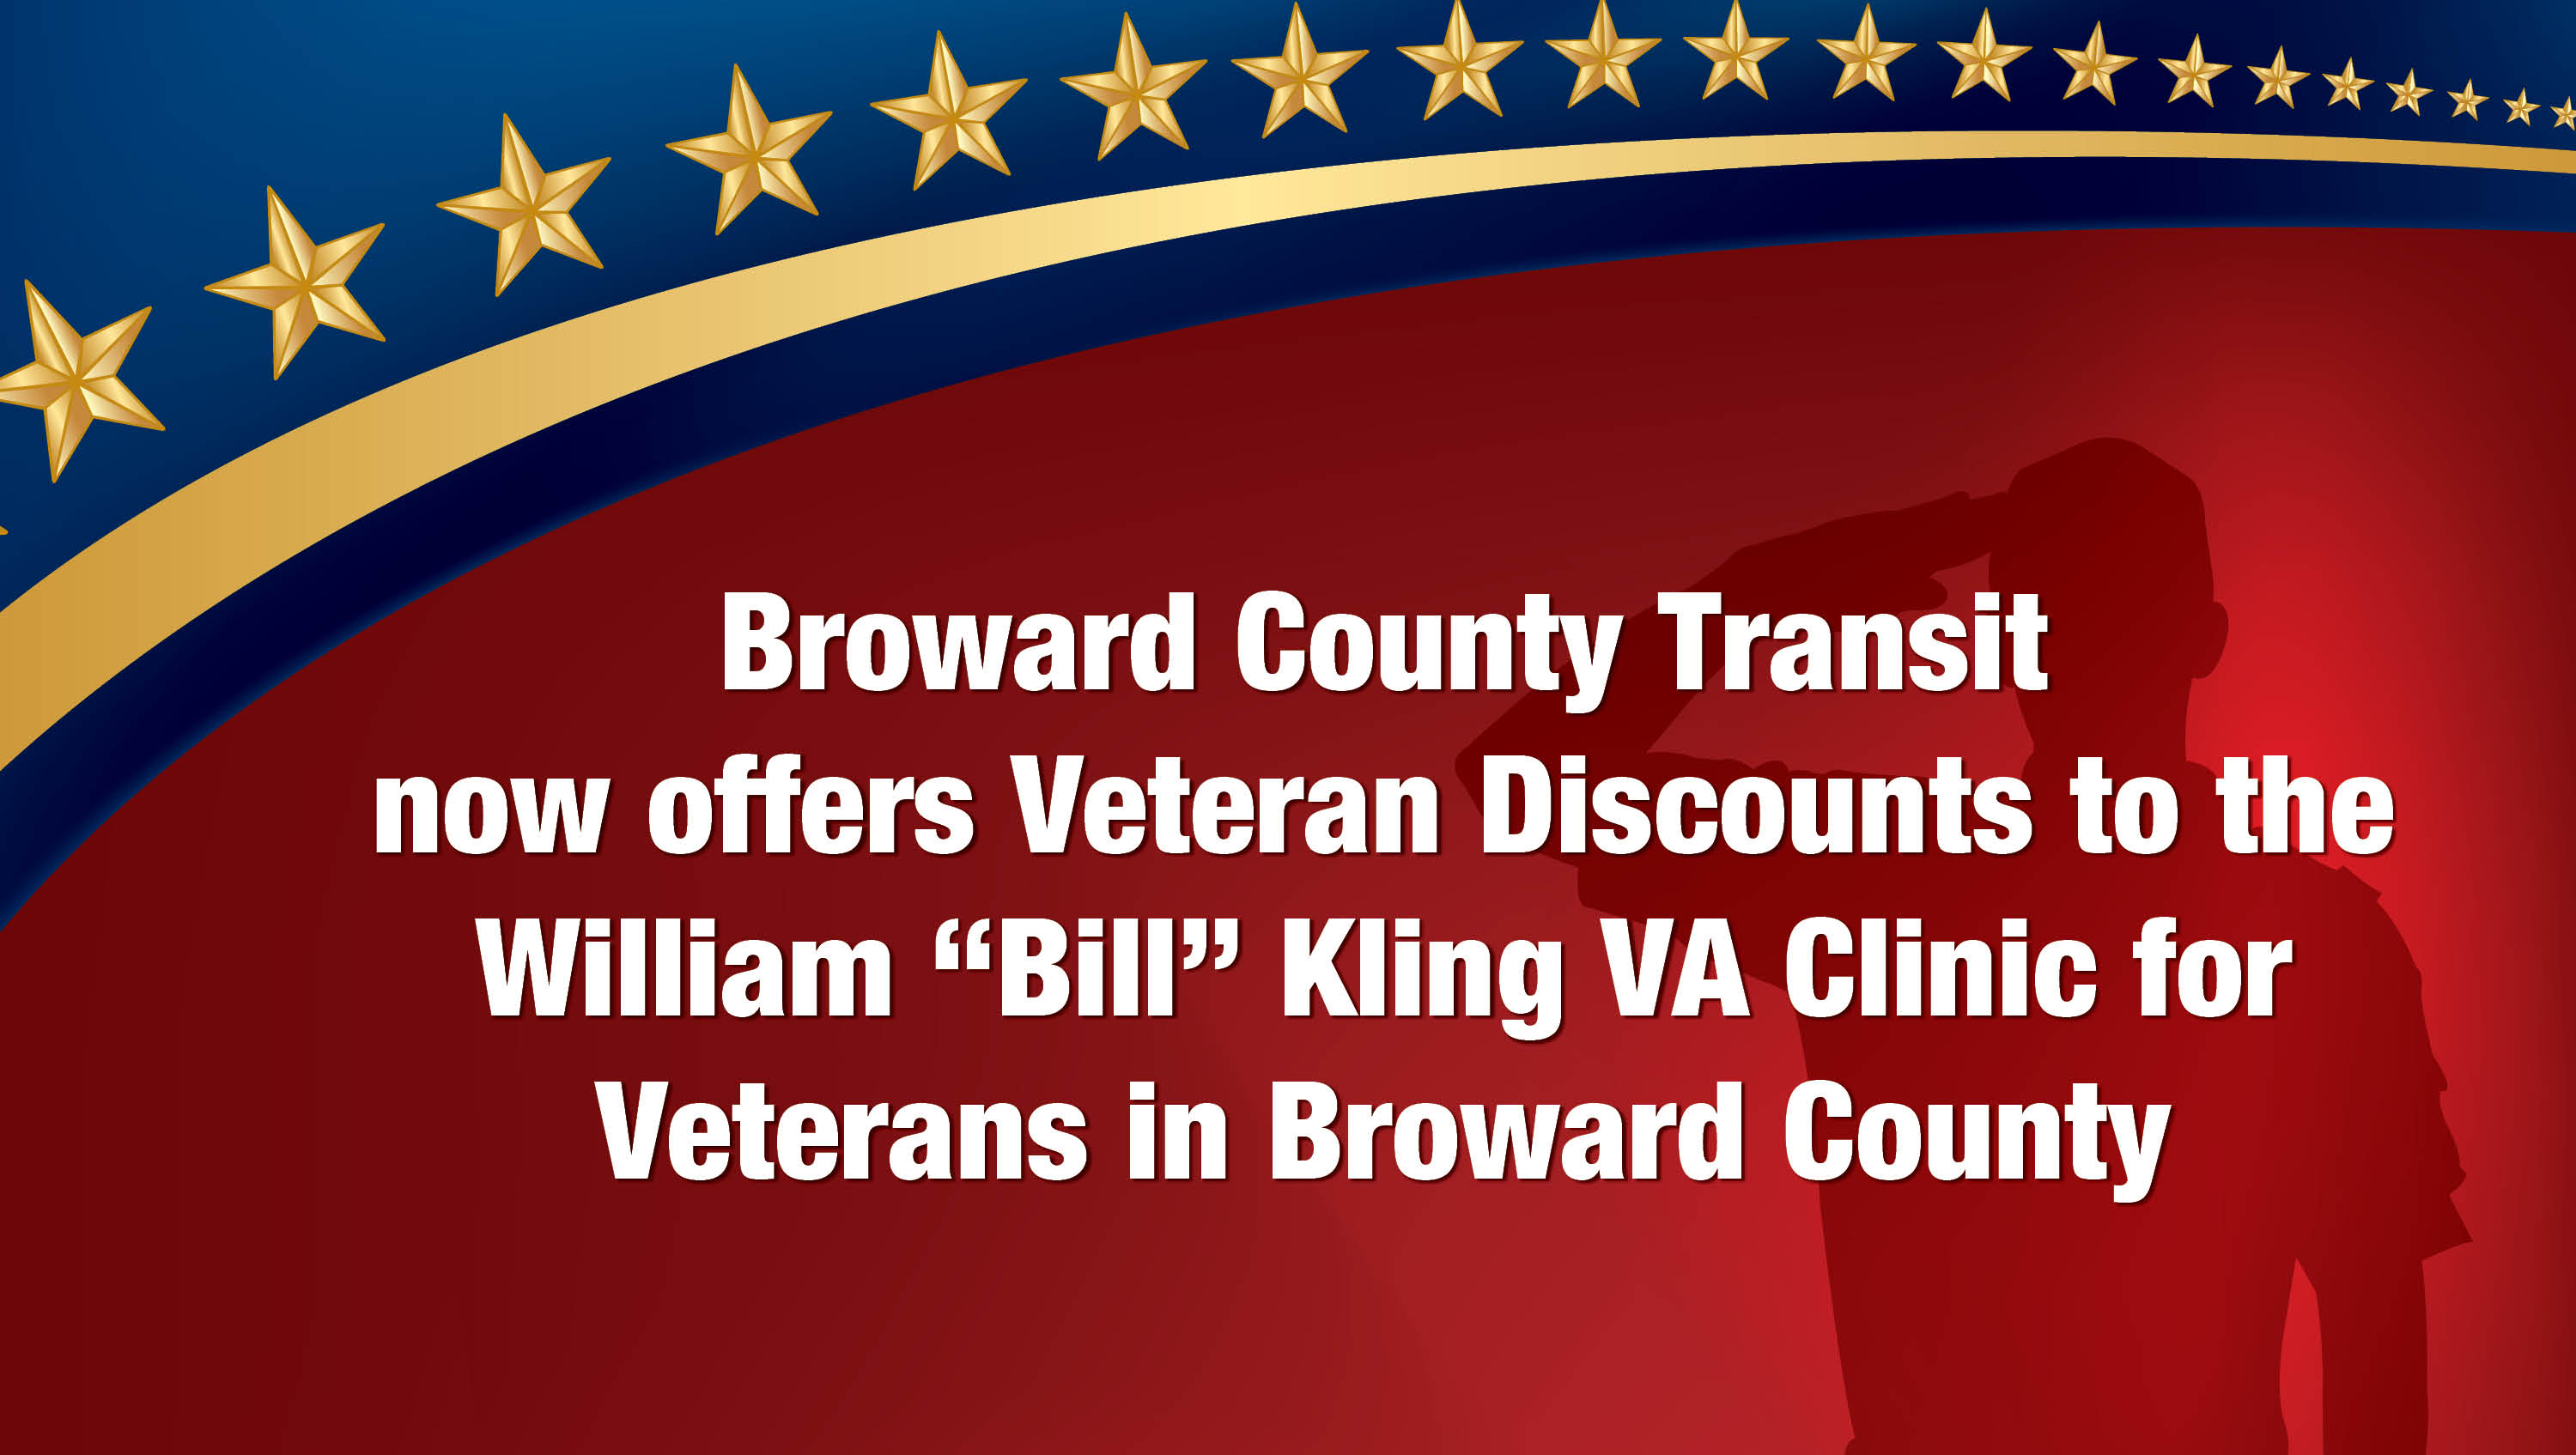 Broward County Transit now offers Veteran discounts to VA facilities